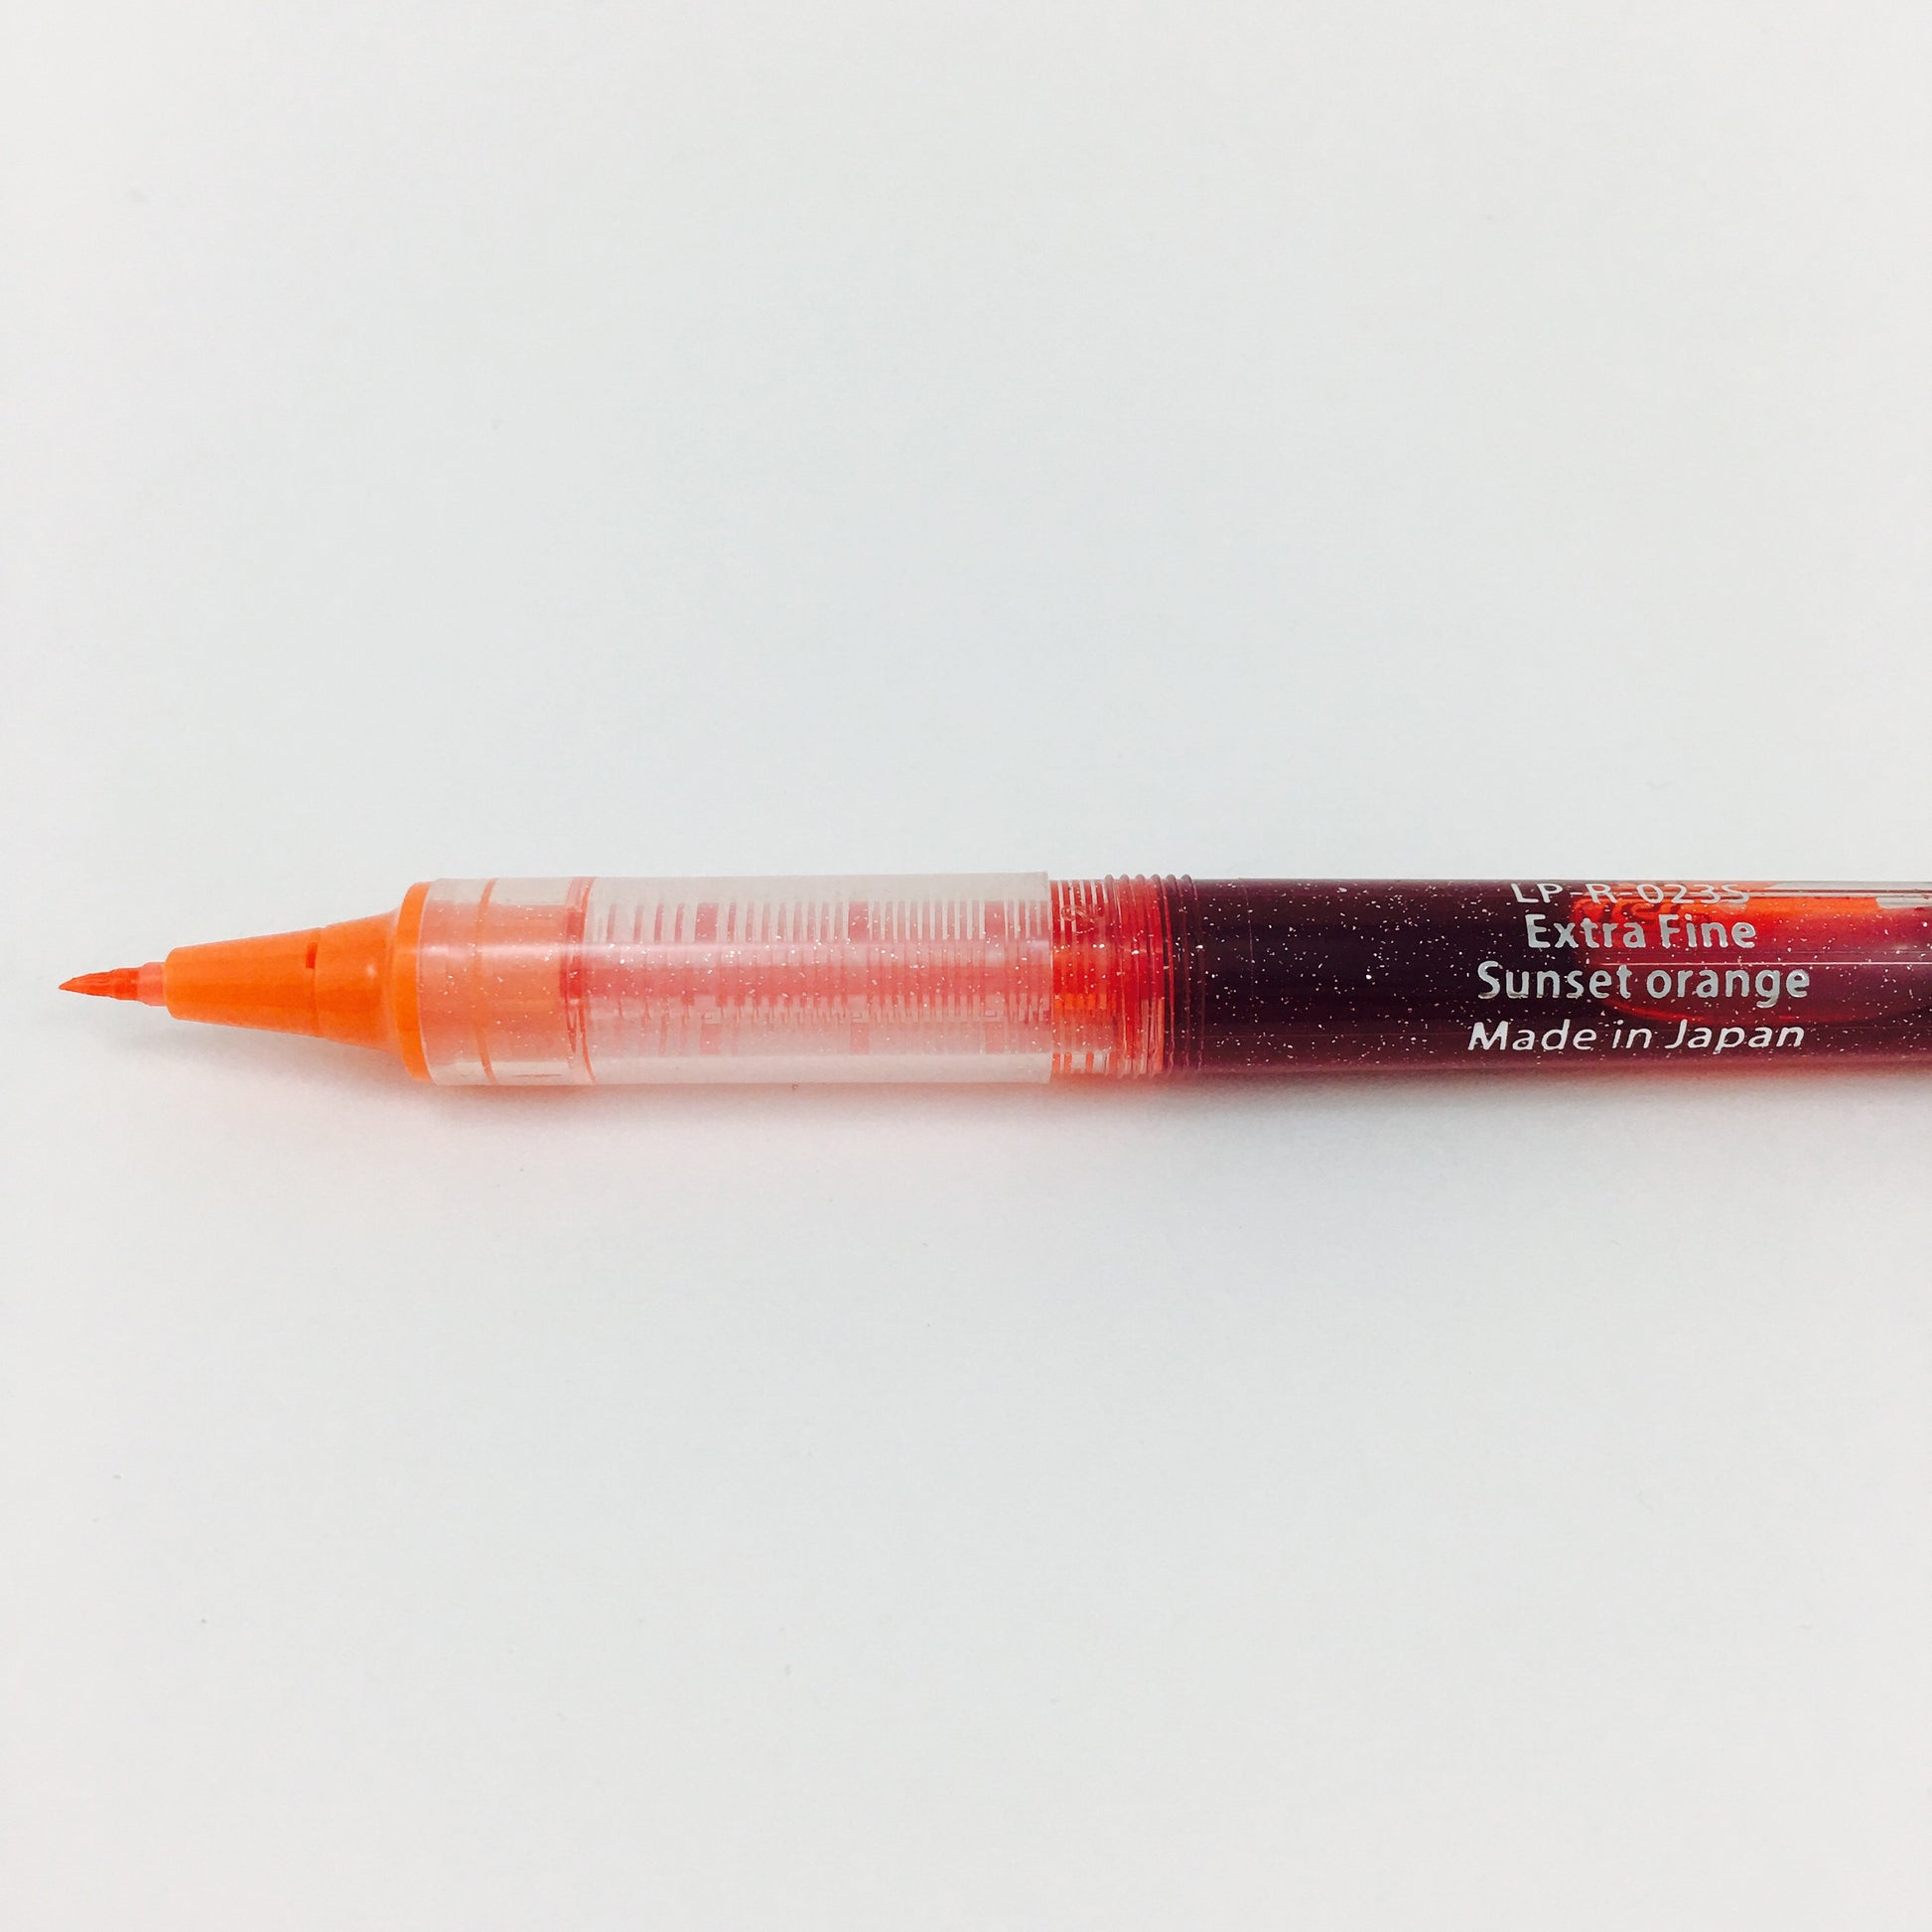 Kuretake Zig Cocoiro Letter Pen Refill, Extra Fine Brush - Red – Ink & Lead